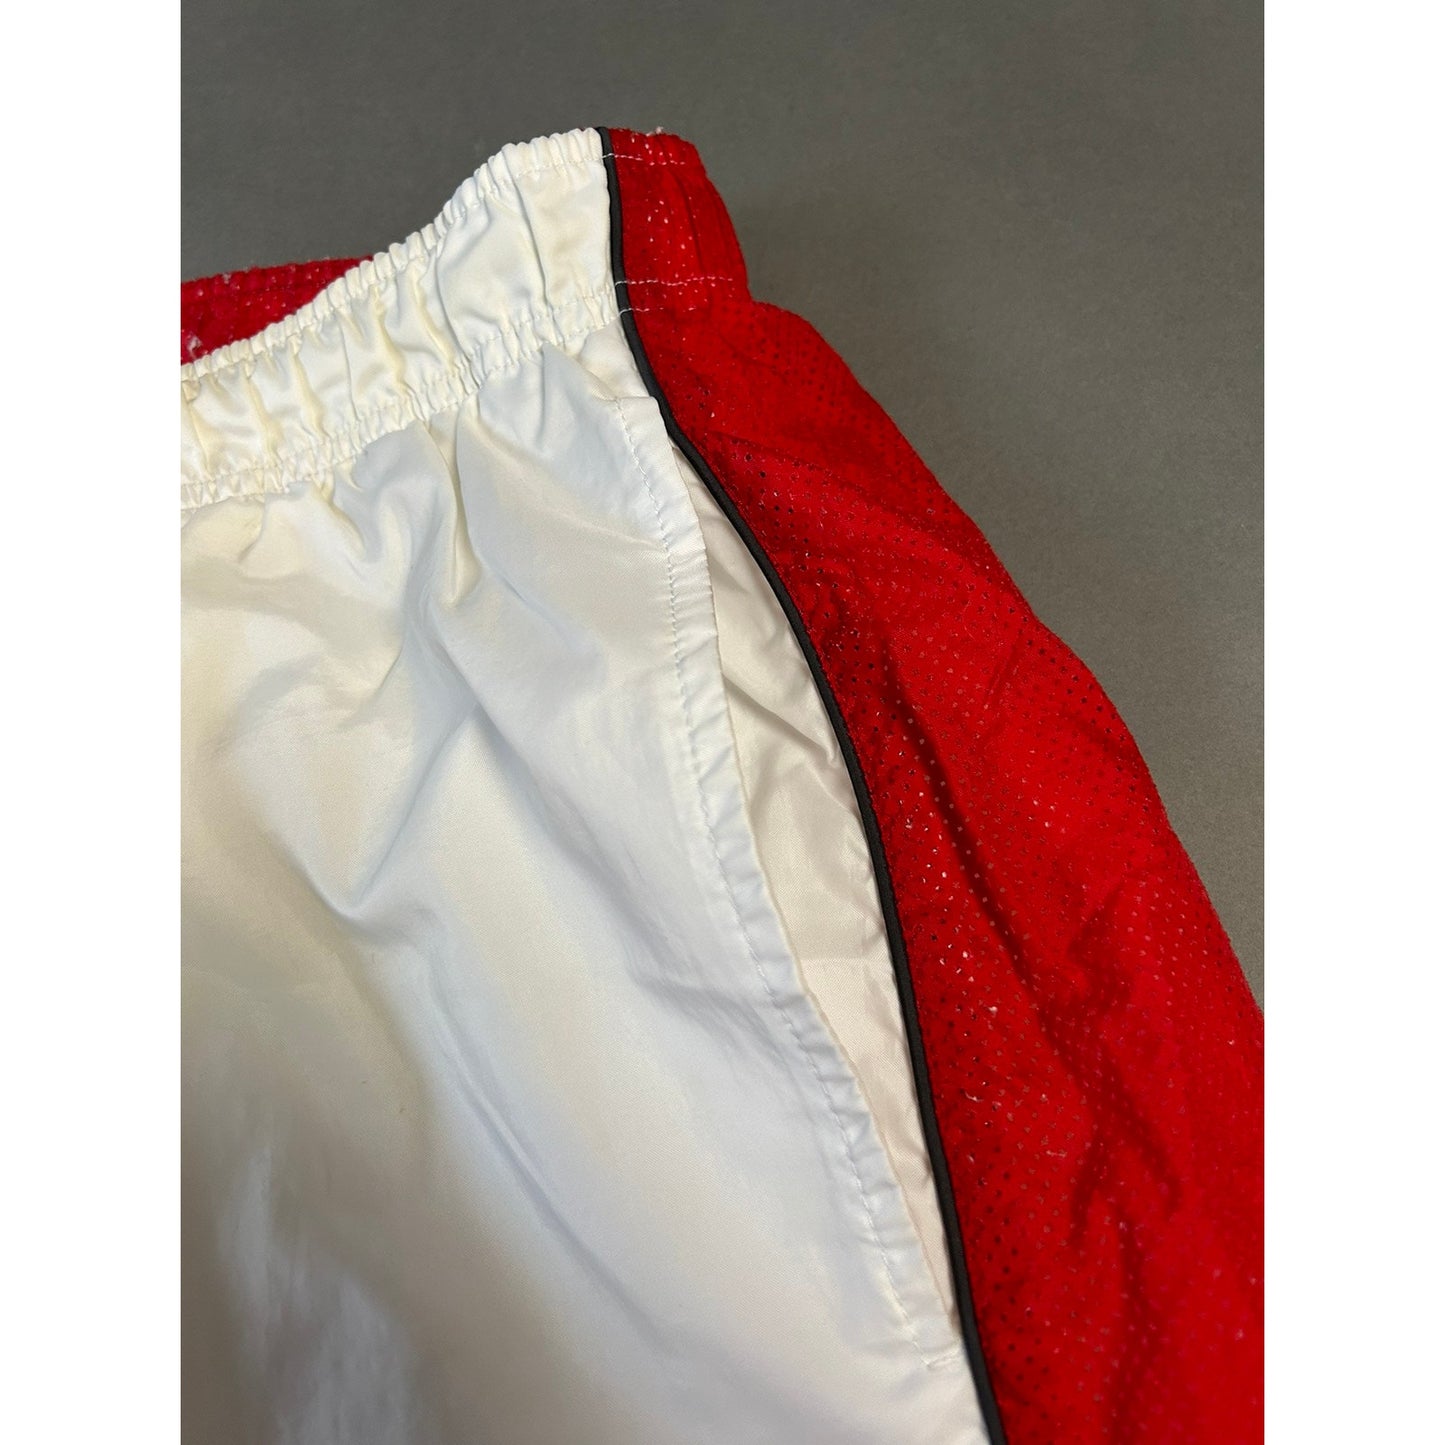 Nike vintage white red shorts hex logo 2000s